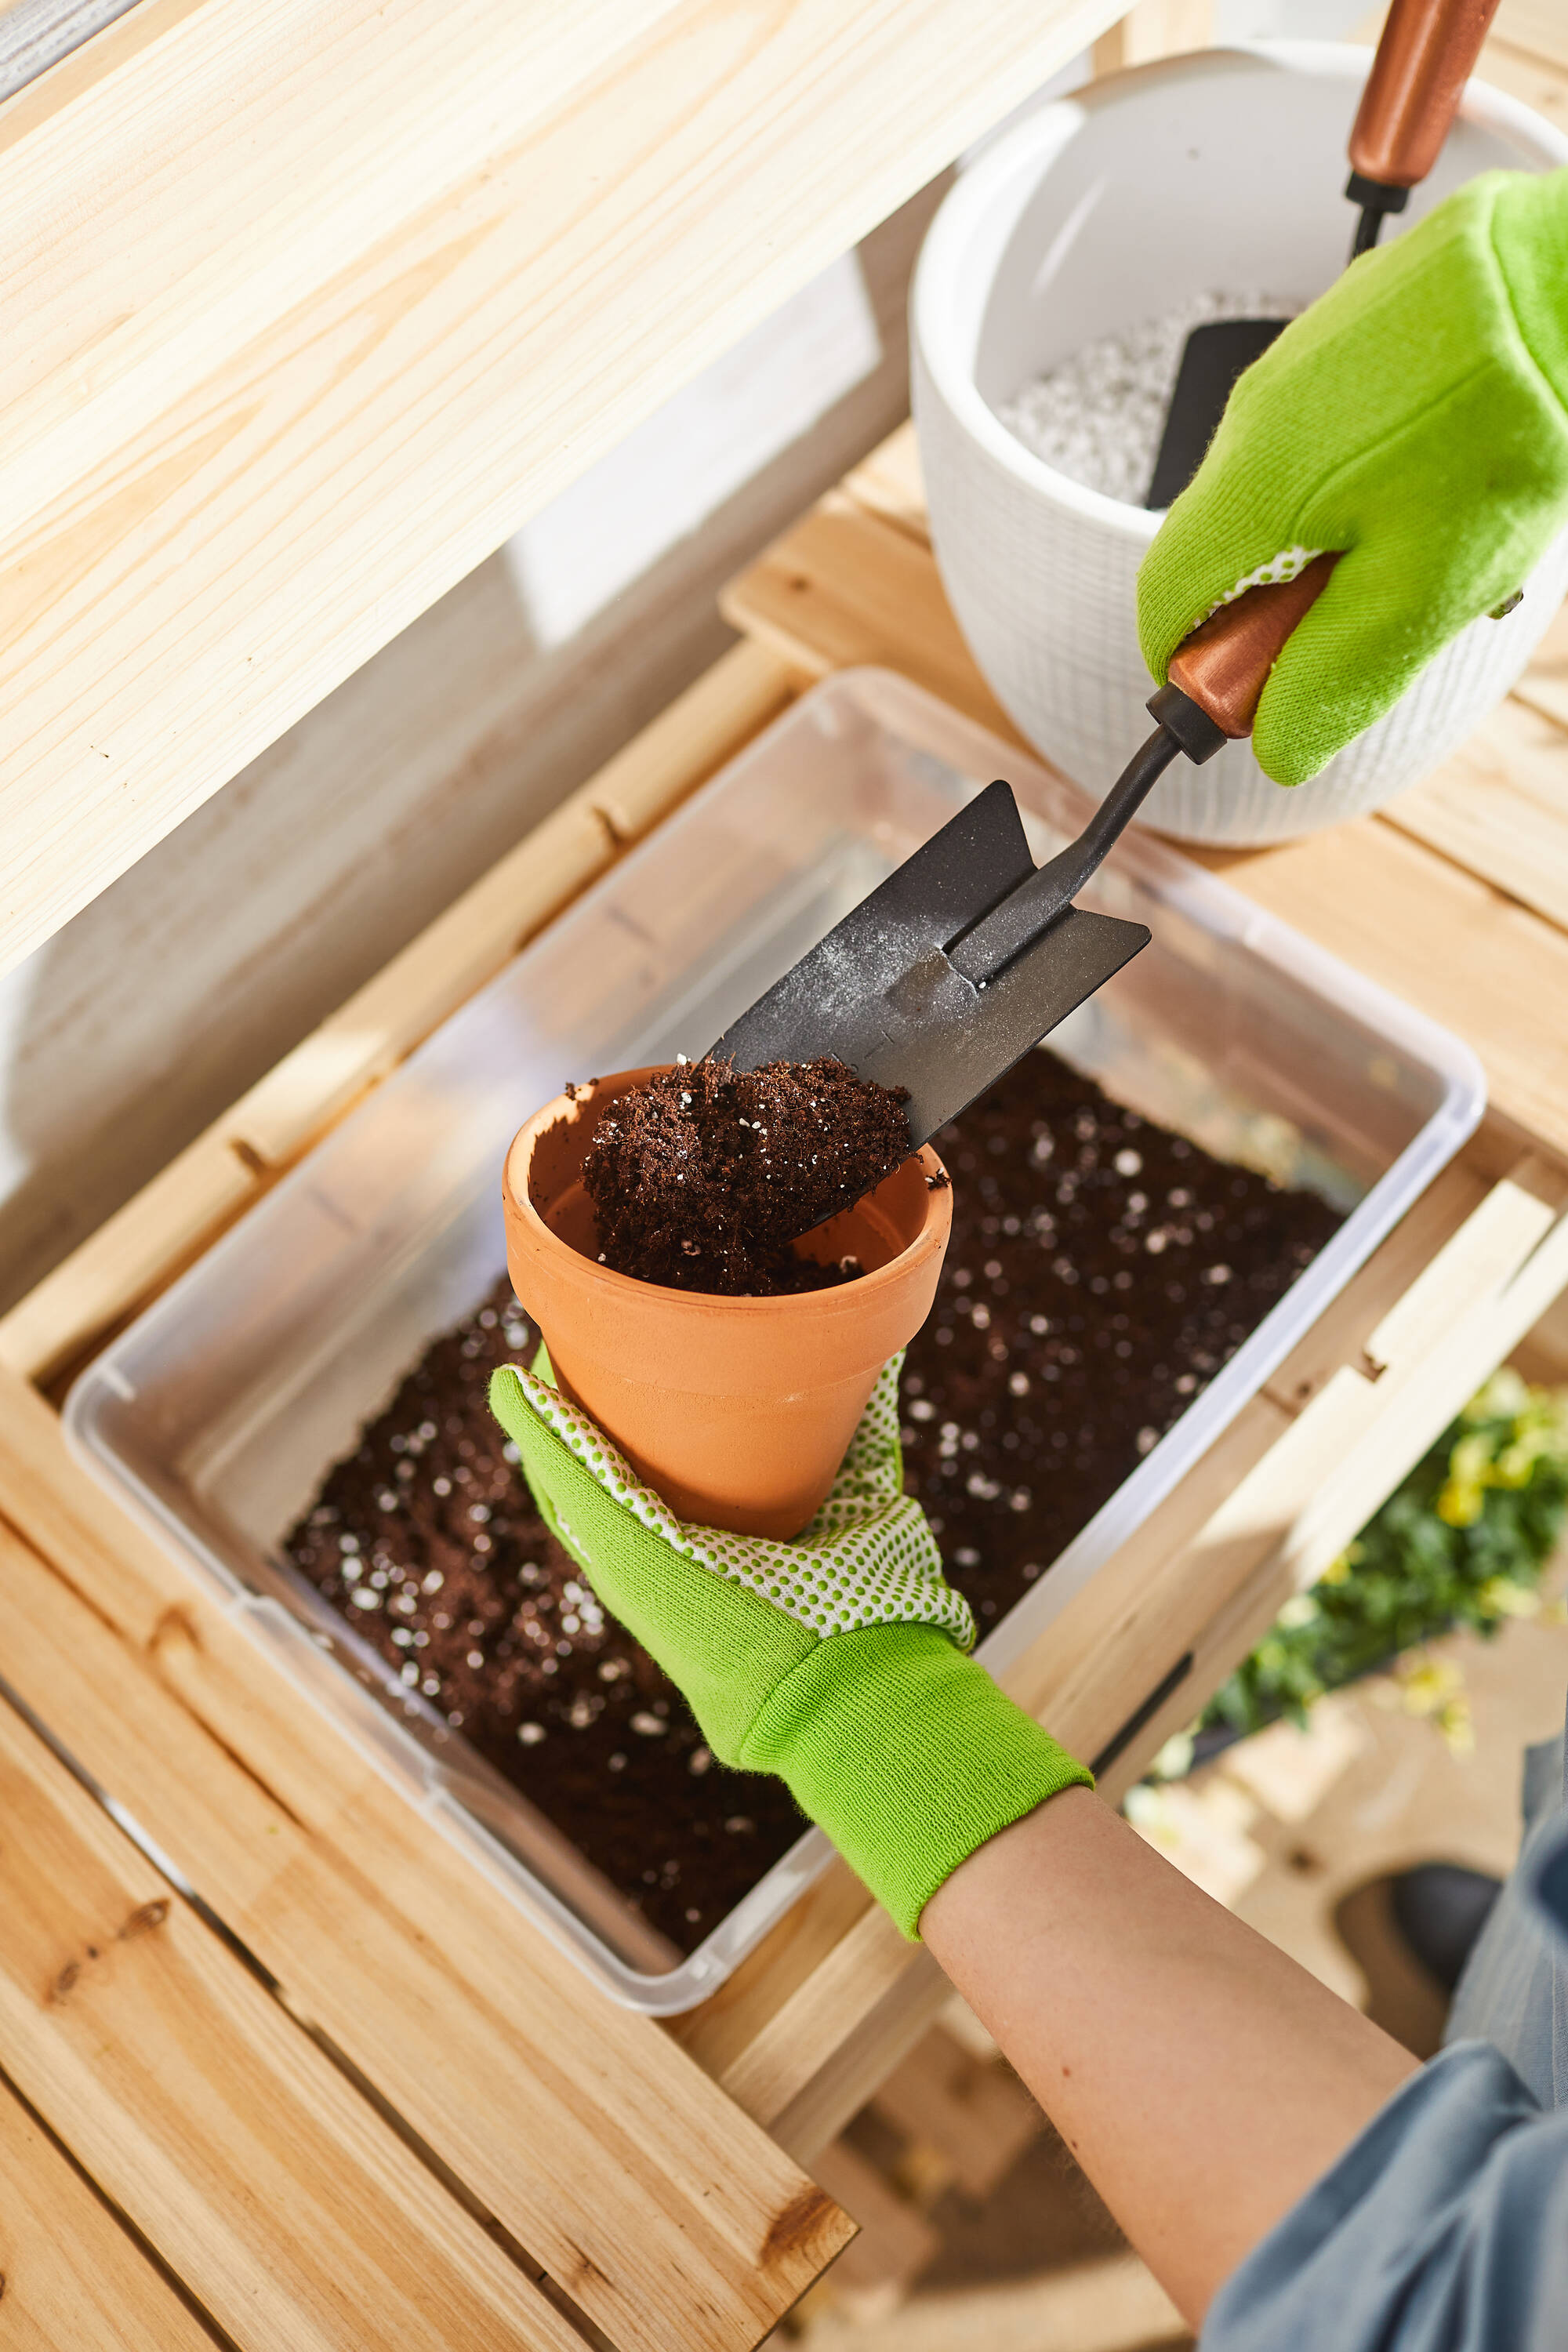 Perfect Plants Organic Garden Coir | 8qt. Premium Garden Coir | Can Be Used  as Soil Amendment or Potting Medium